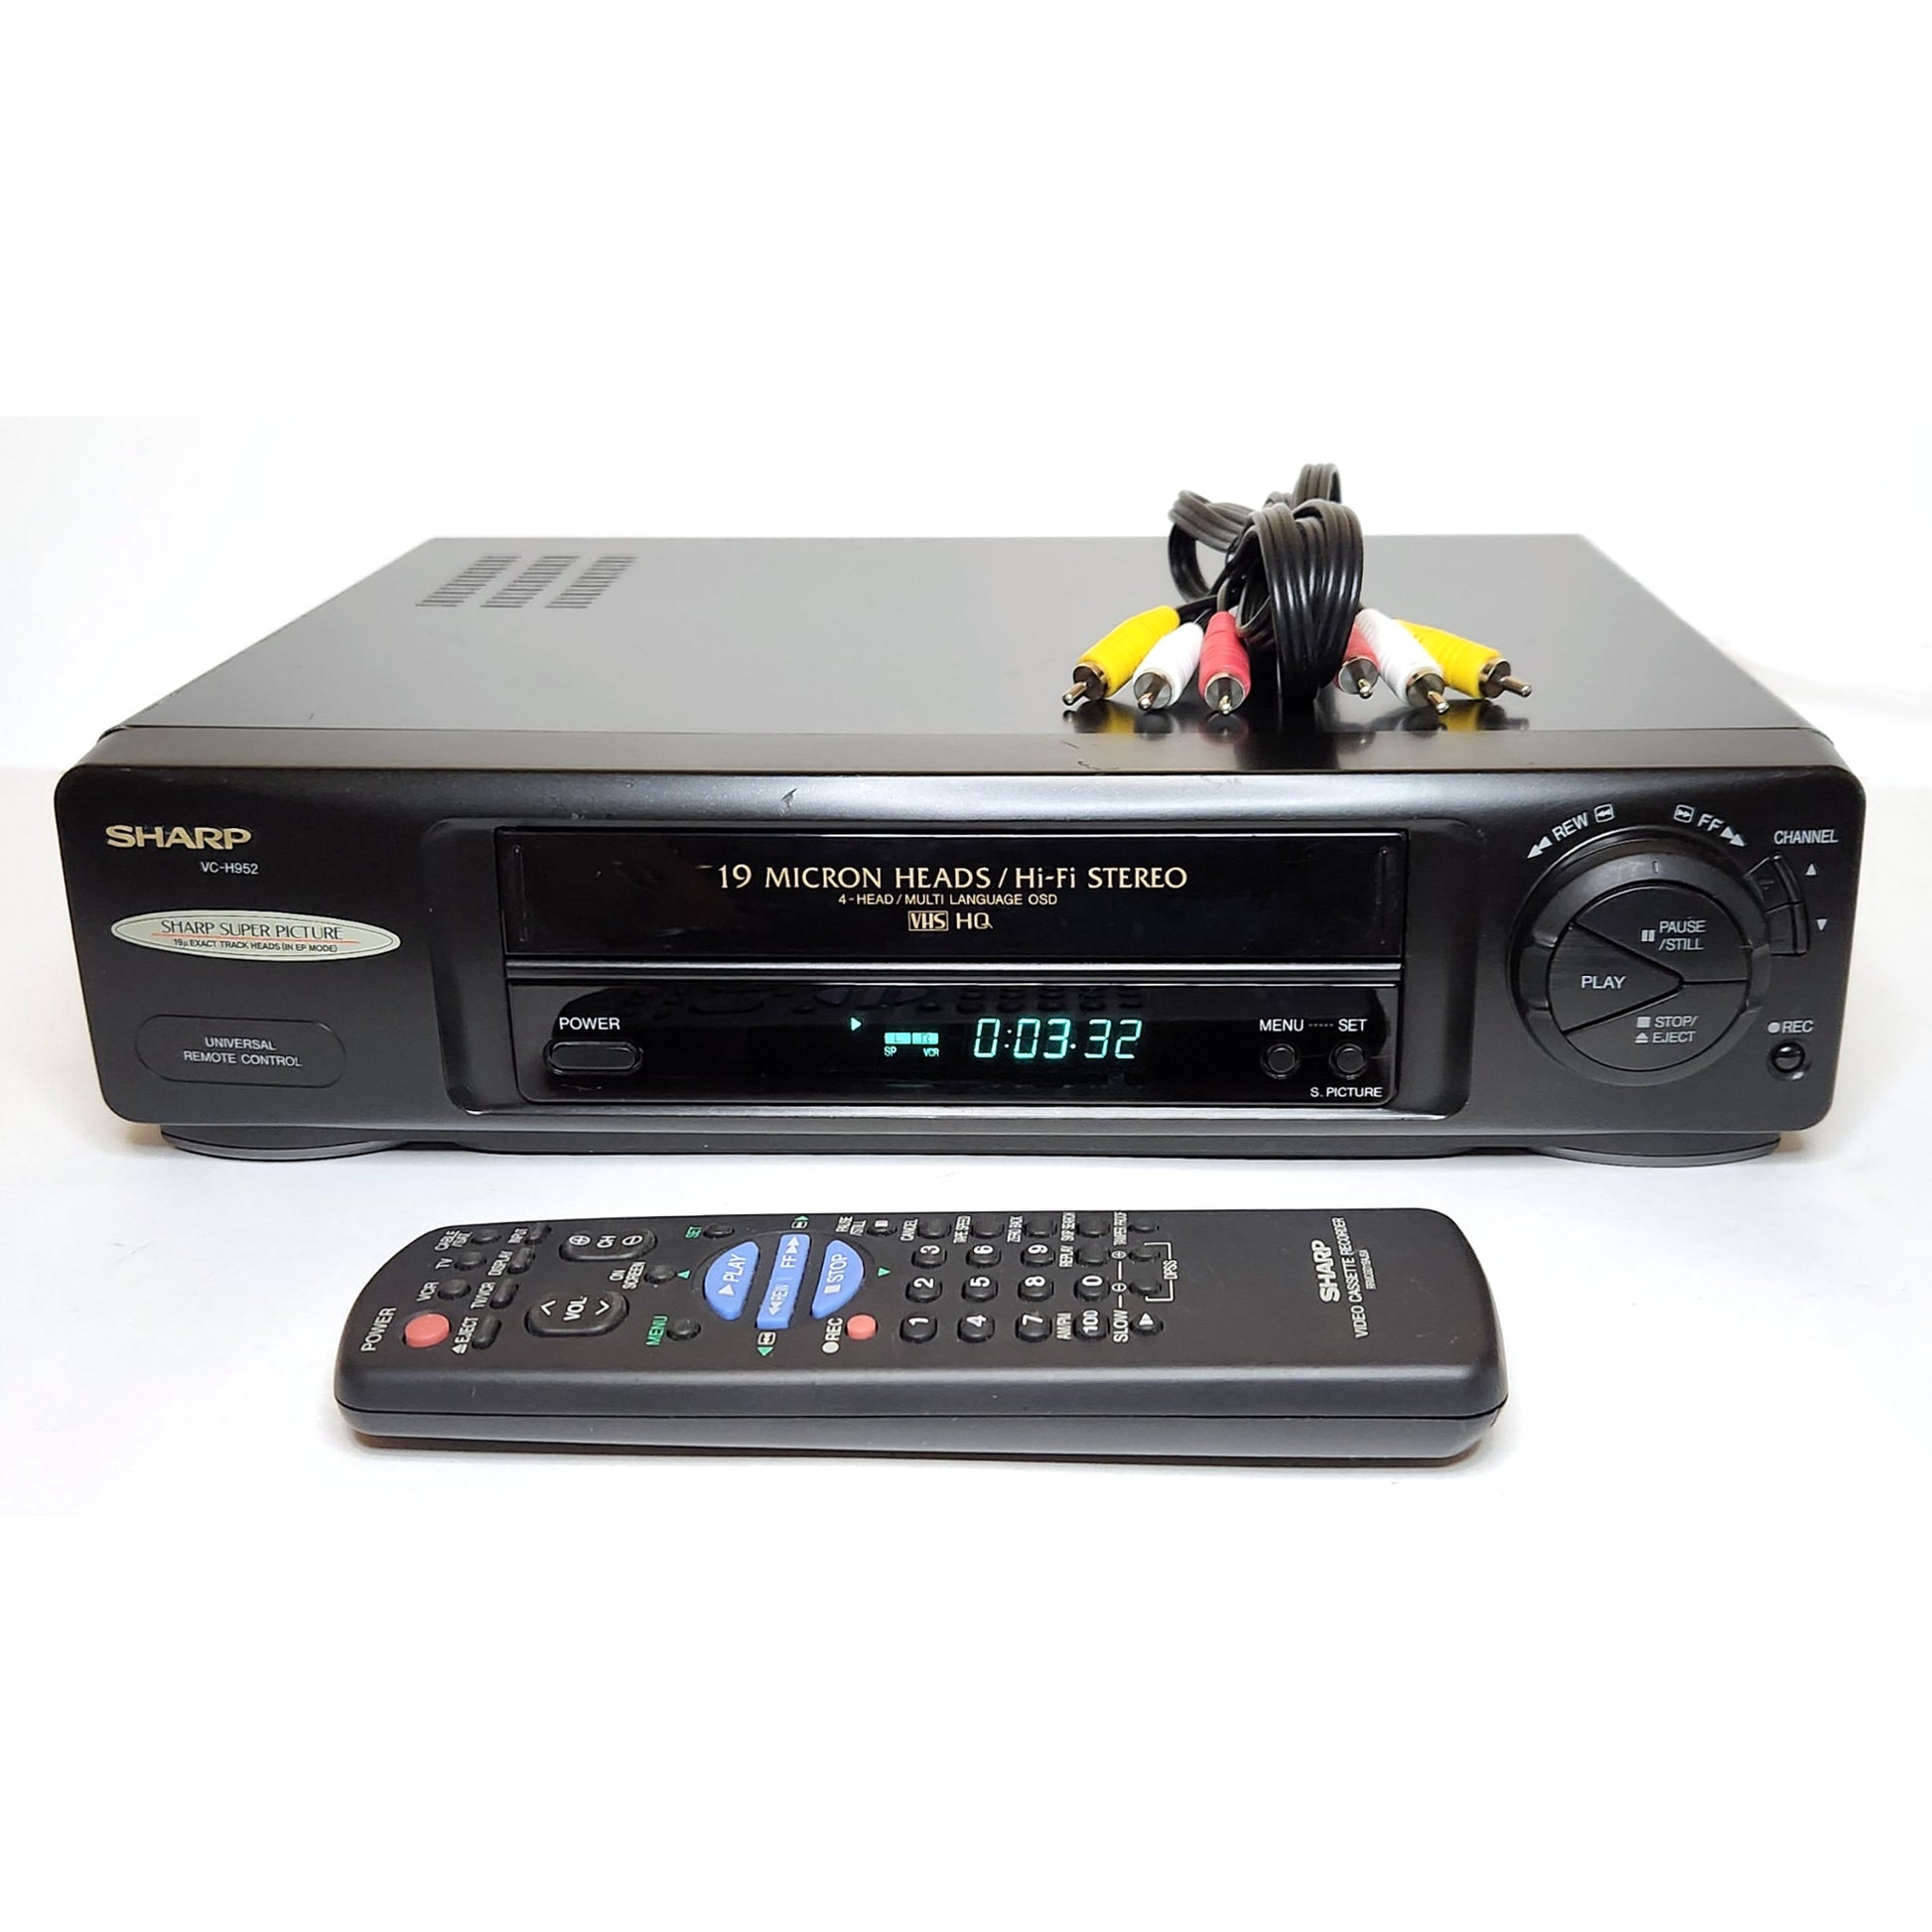 Sharp VC-H952U VCR, 4-Head Hi-Fi Stereo